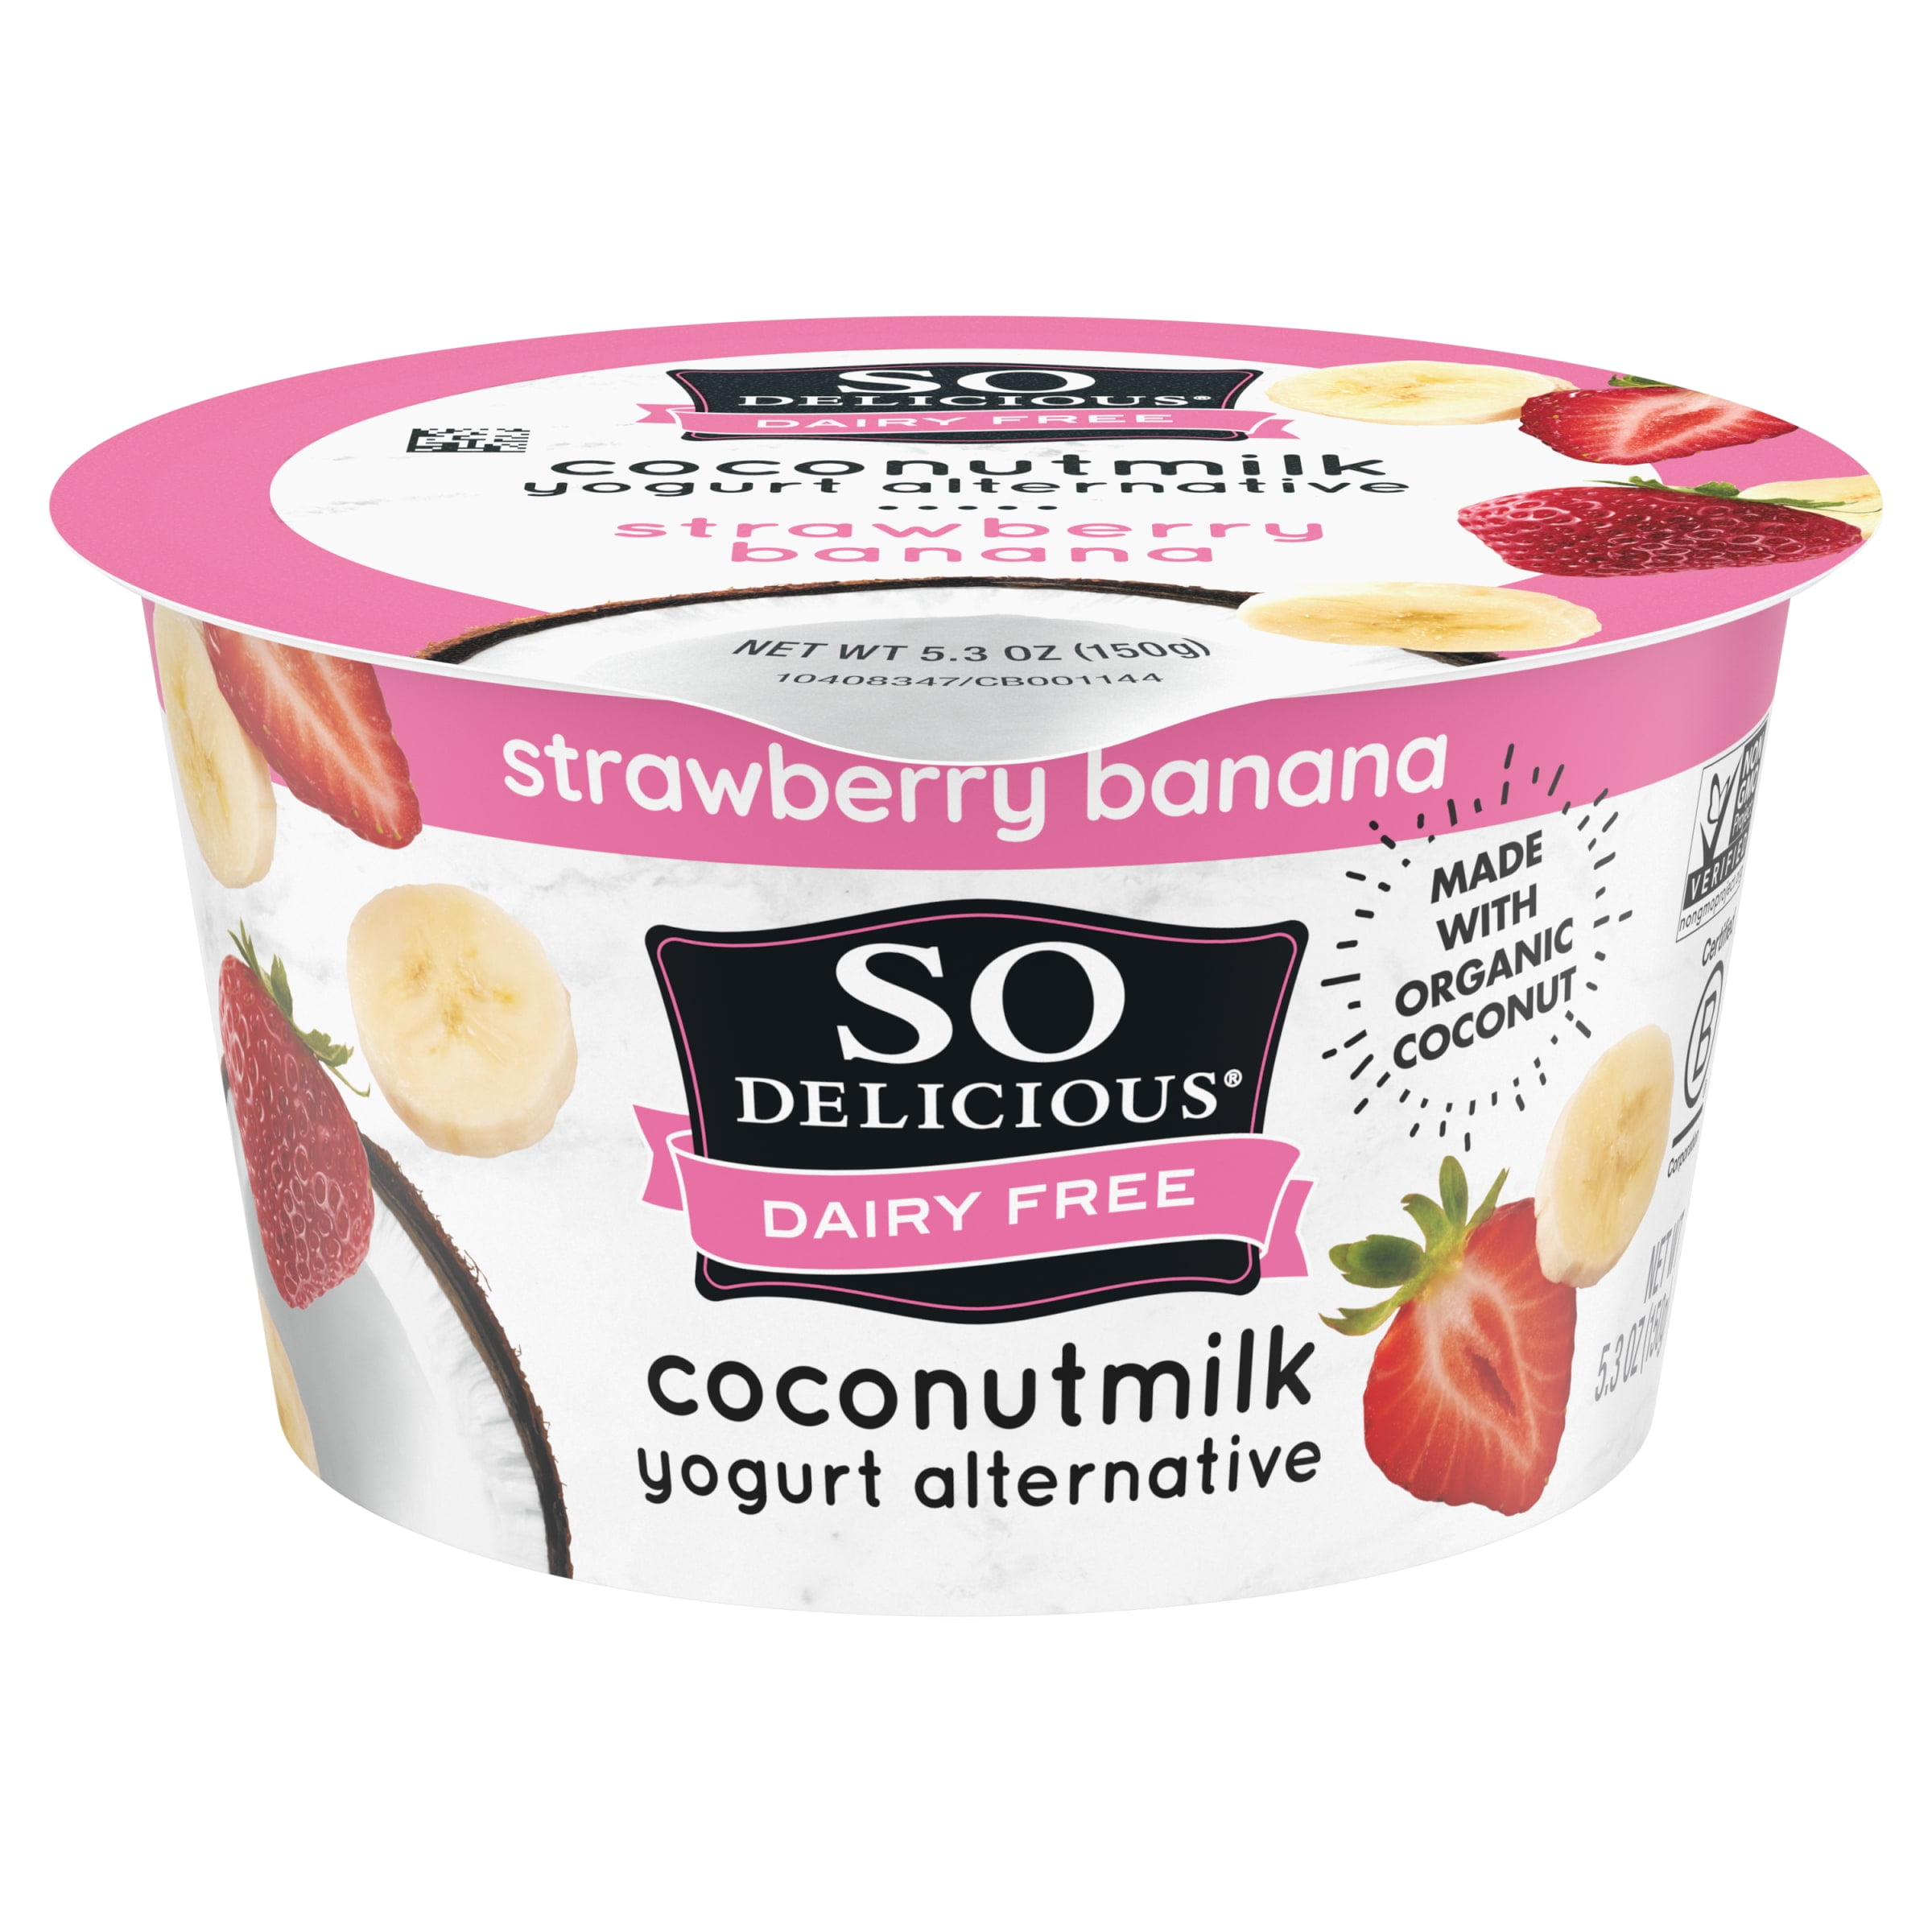 So Delicious Dairy Free Strawberry Banana Coconut Milk Yogurt, 5.3 Oz.